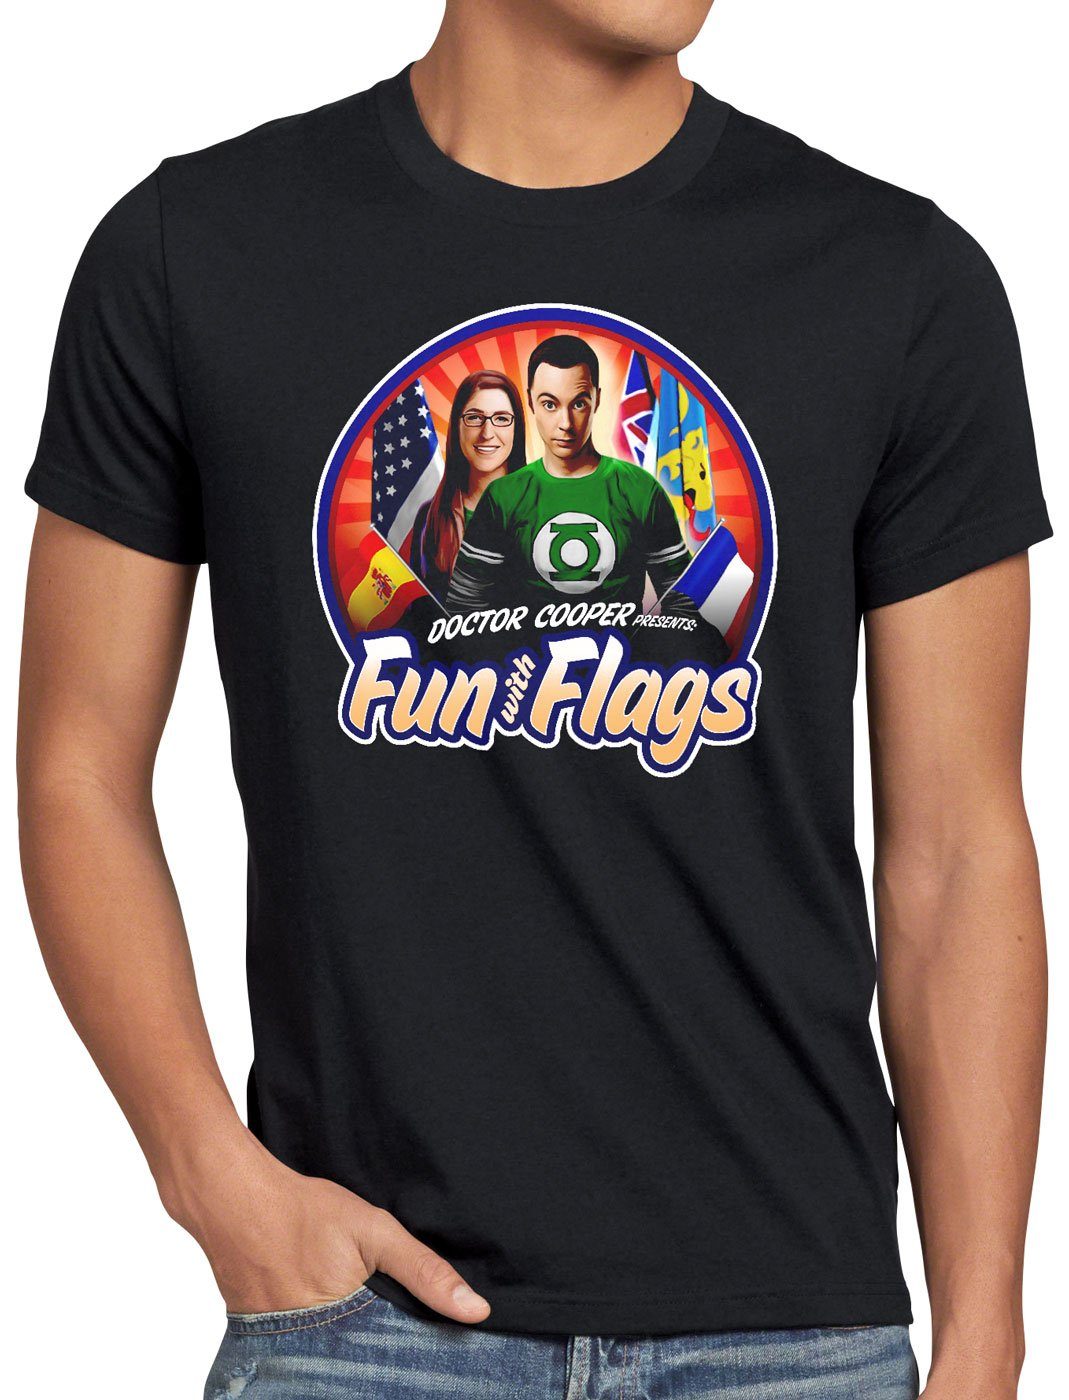 Herren T-Shirt banner Flags fahne amy schwarz sheldon flagge style3 wih Print-Shirt Fun